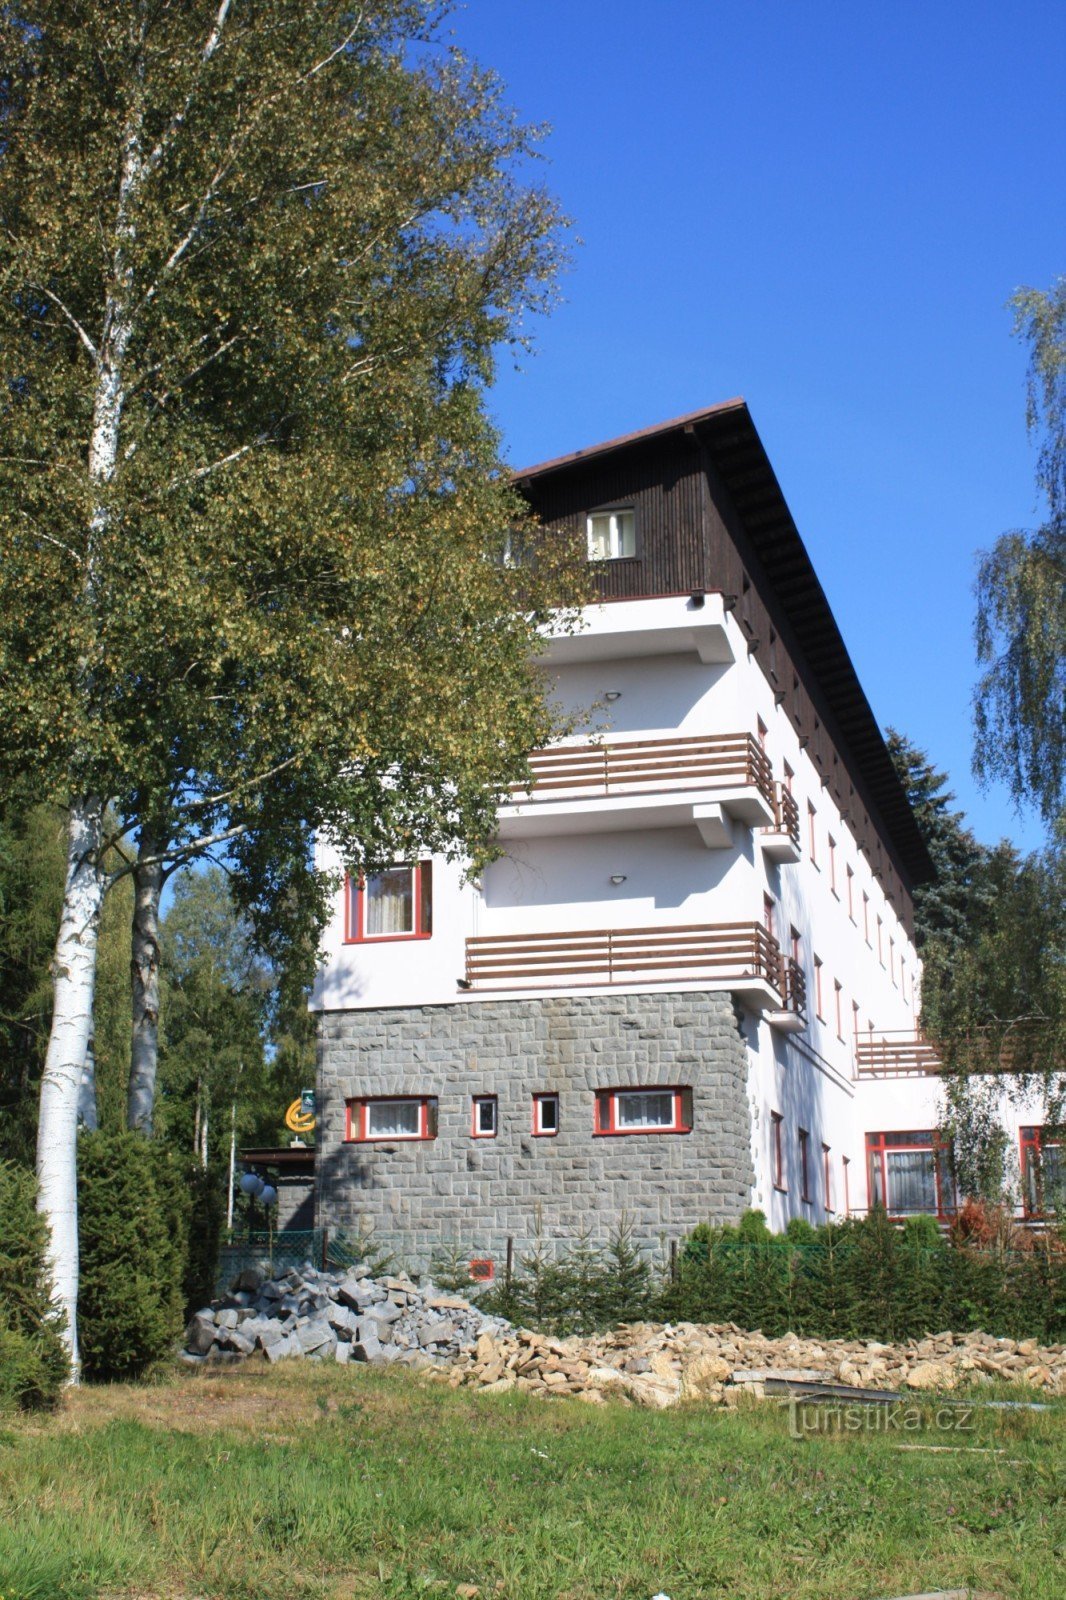 Svratka - Information center